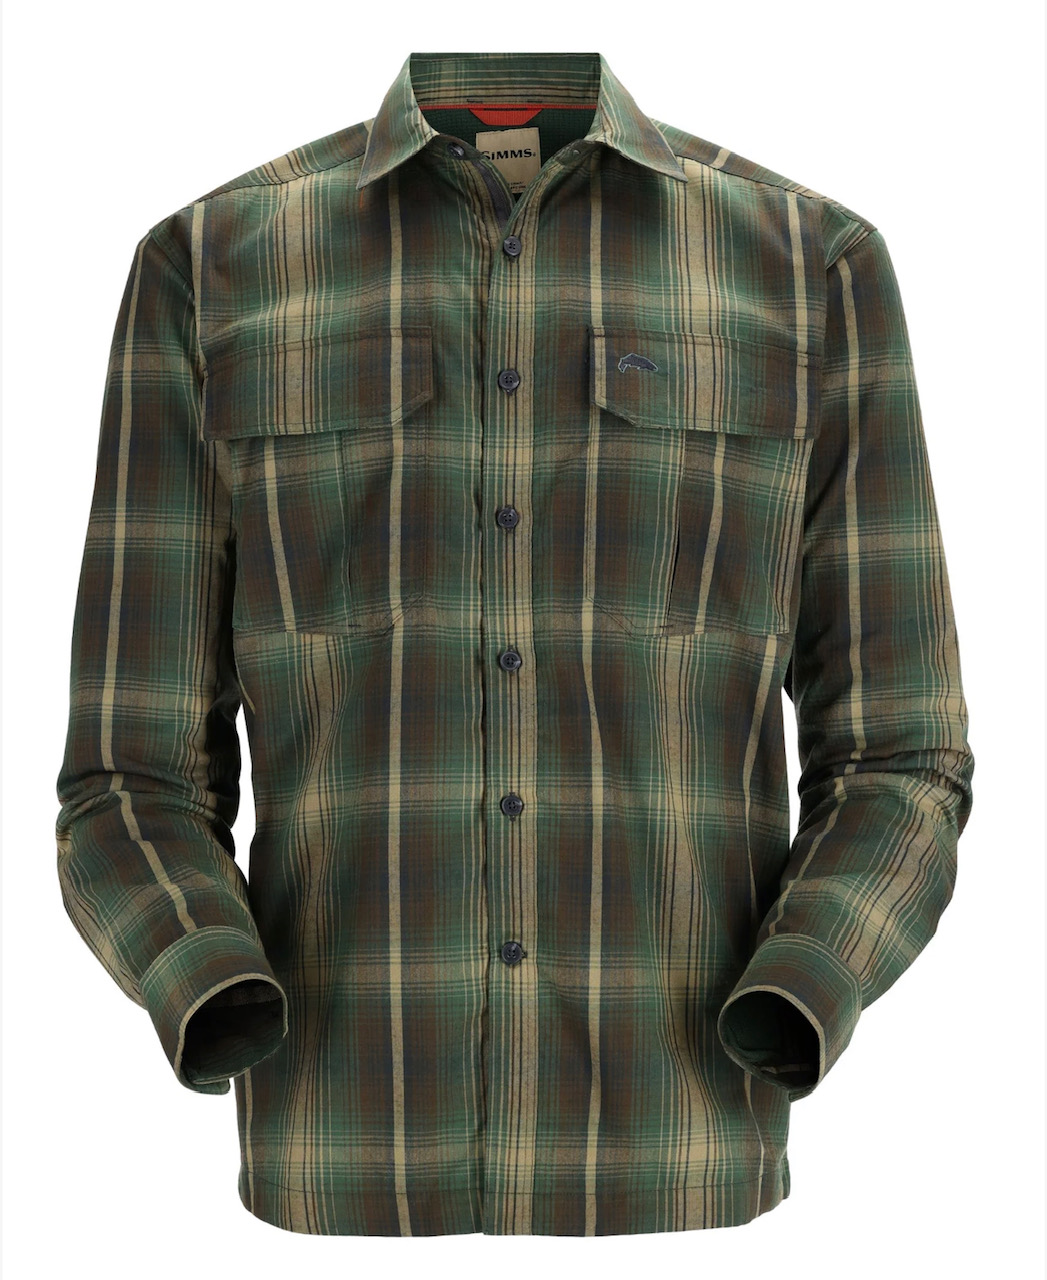 Simms M's Coldweather Shirt - Forest Hickory Plaid - Medium